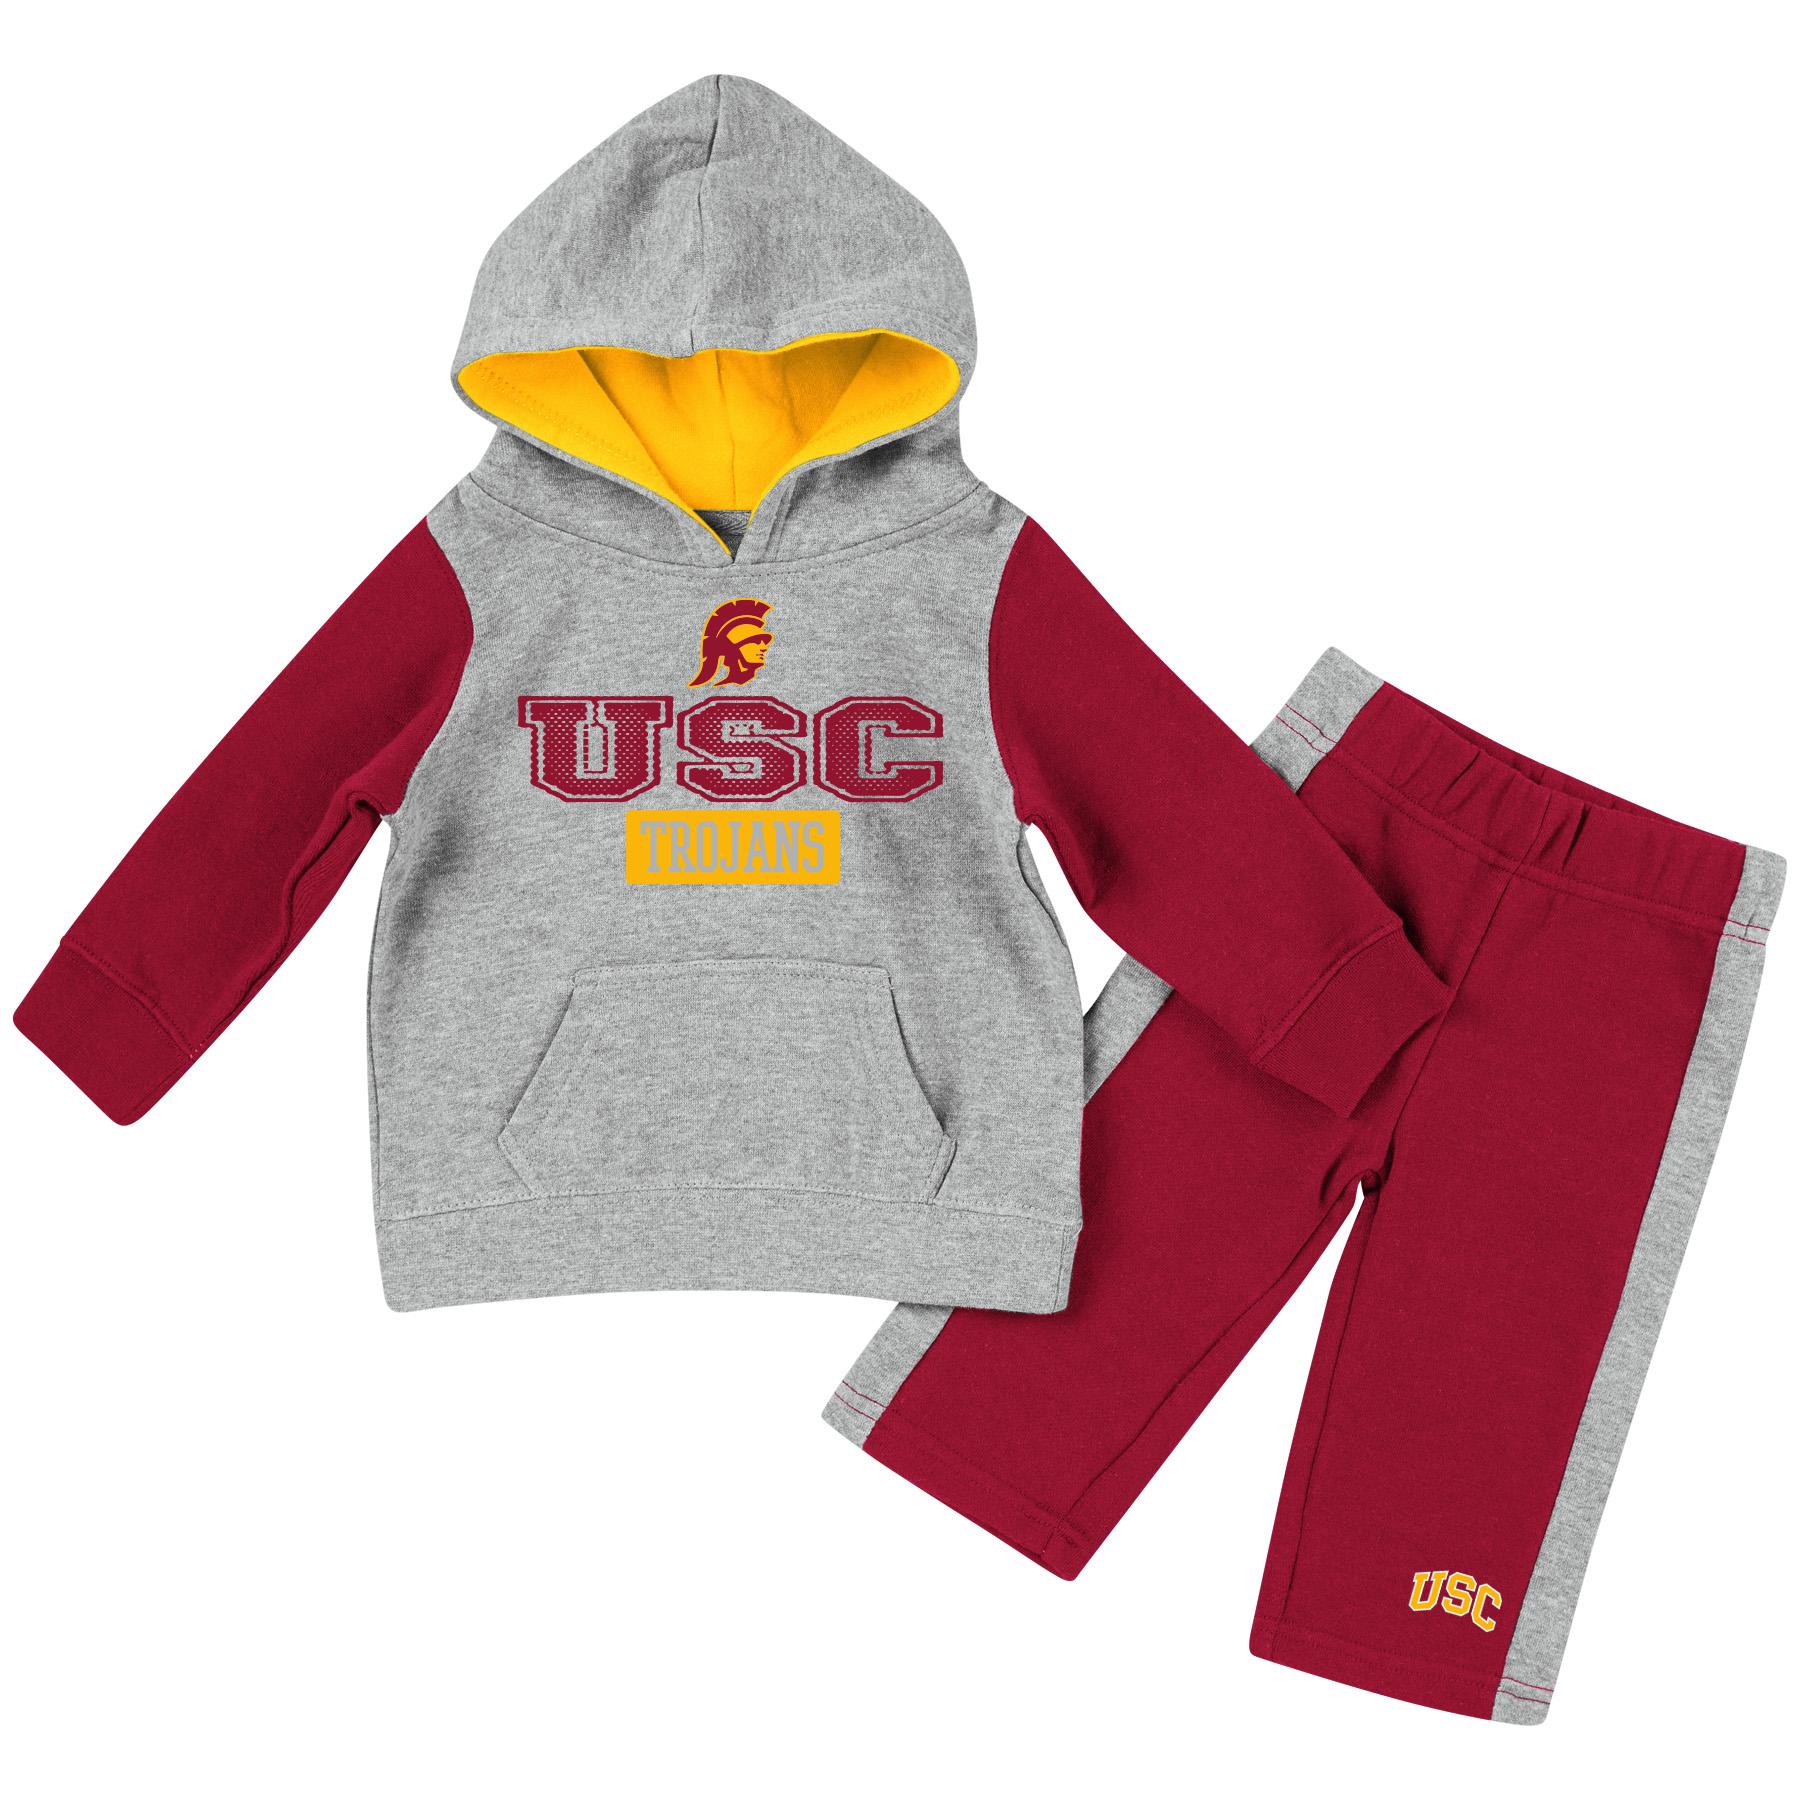 USC Trojans Infant Boys Fleece 2PC Set FA18 image01